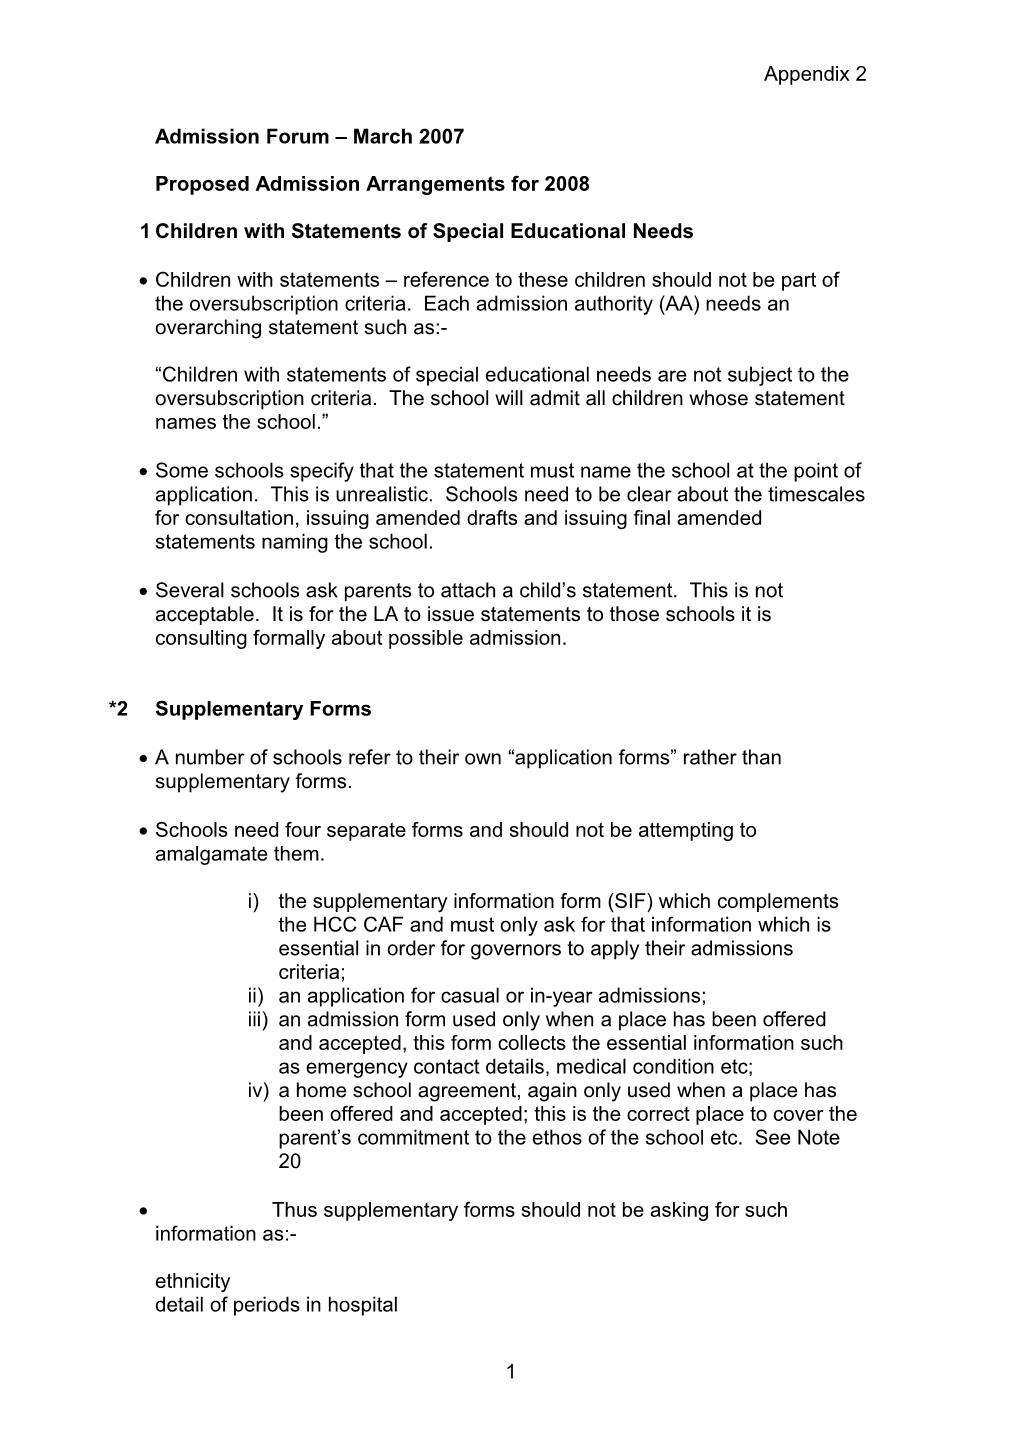 Proposed Admission Arrangements for 2008